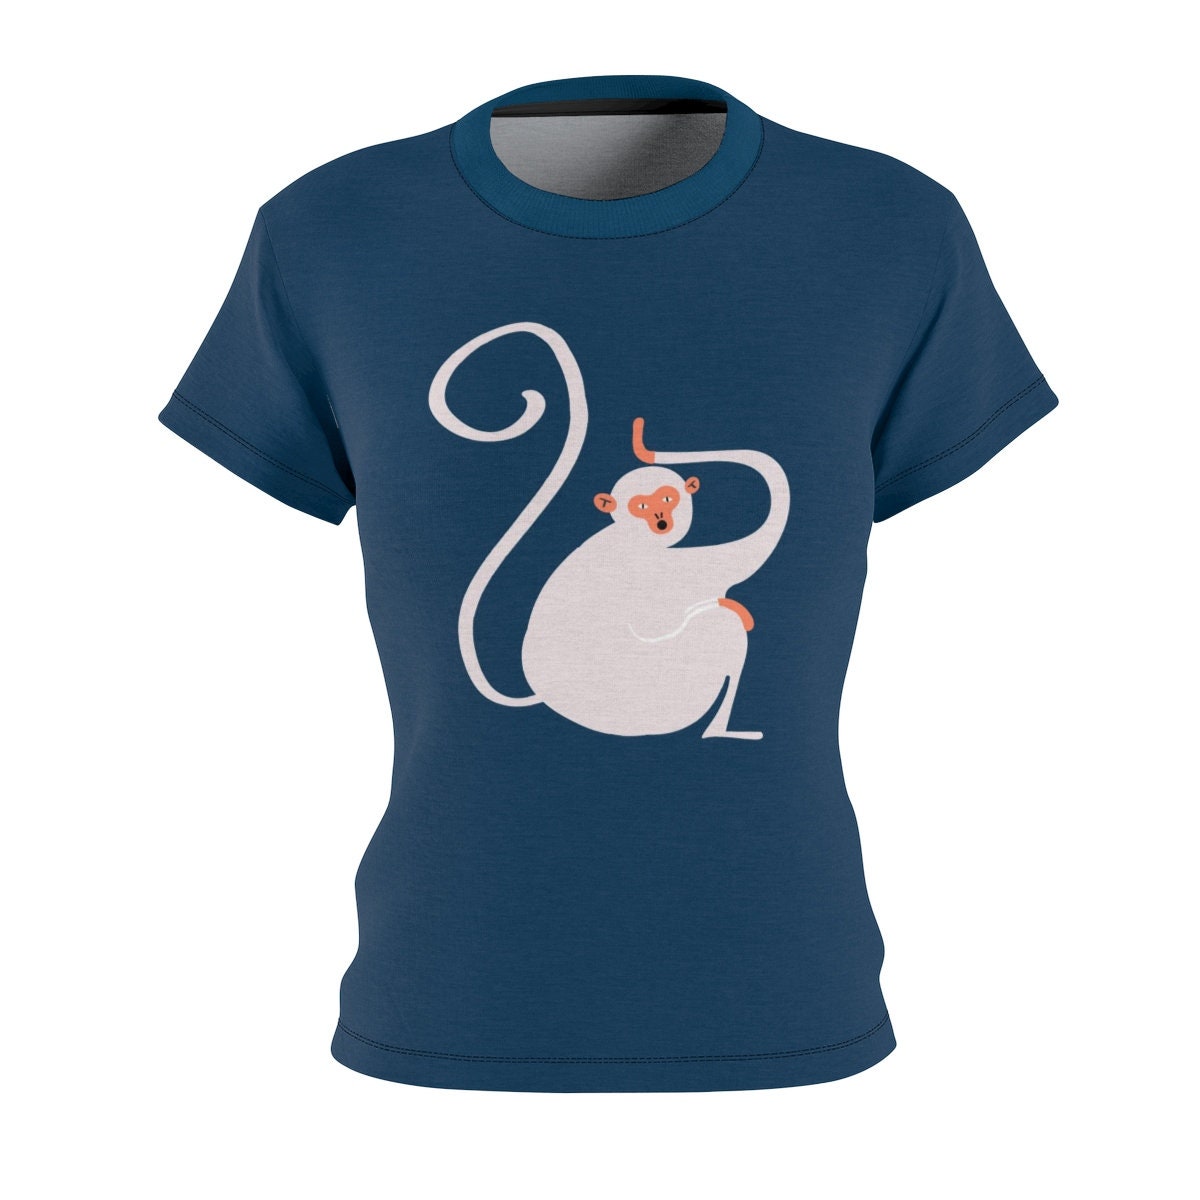 Year of the Monkey / Astrology / Chinese / Zodiac / T-shirt / Tee / Shirt / Monkey / Art / Valentine / Birthday / Clothing / Gift for Her - Chloe Lambertin